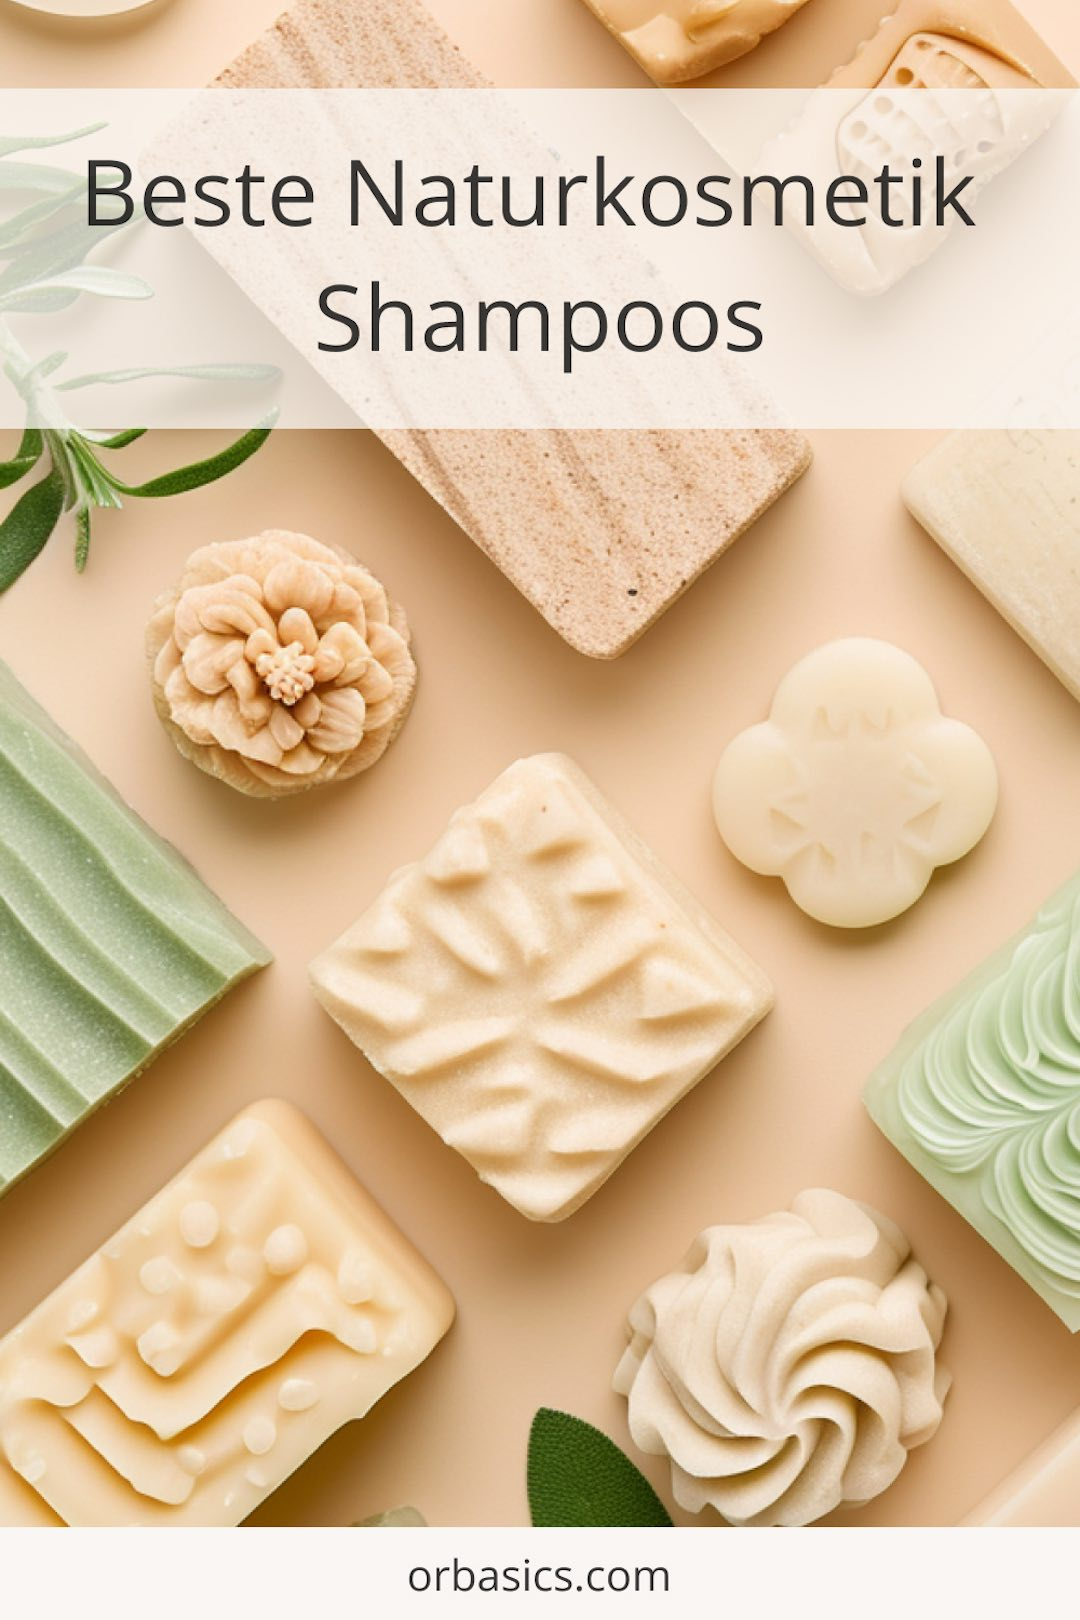 Beste naturkosmetik shampoos